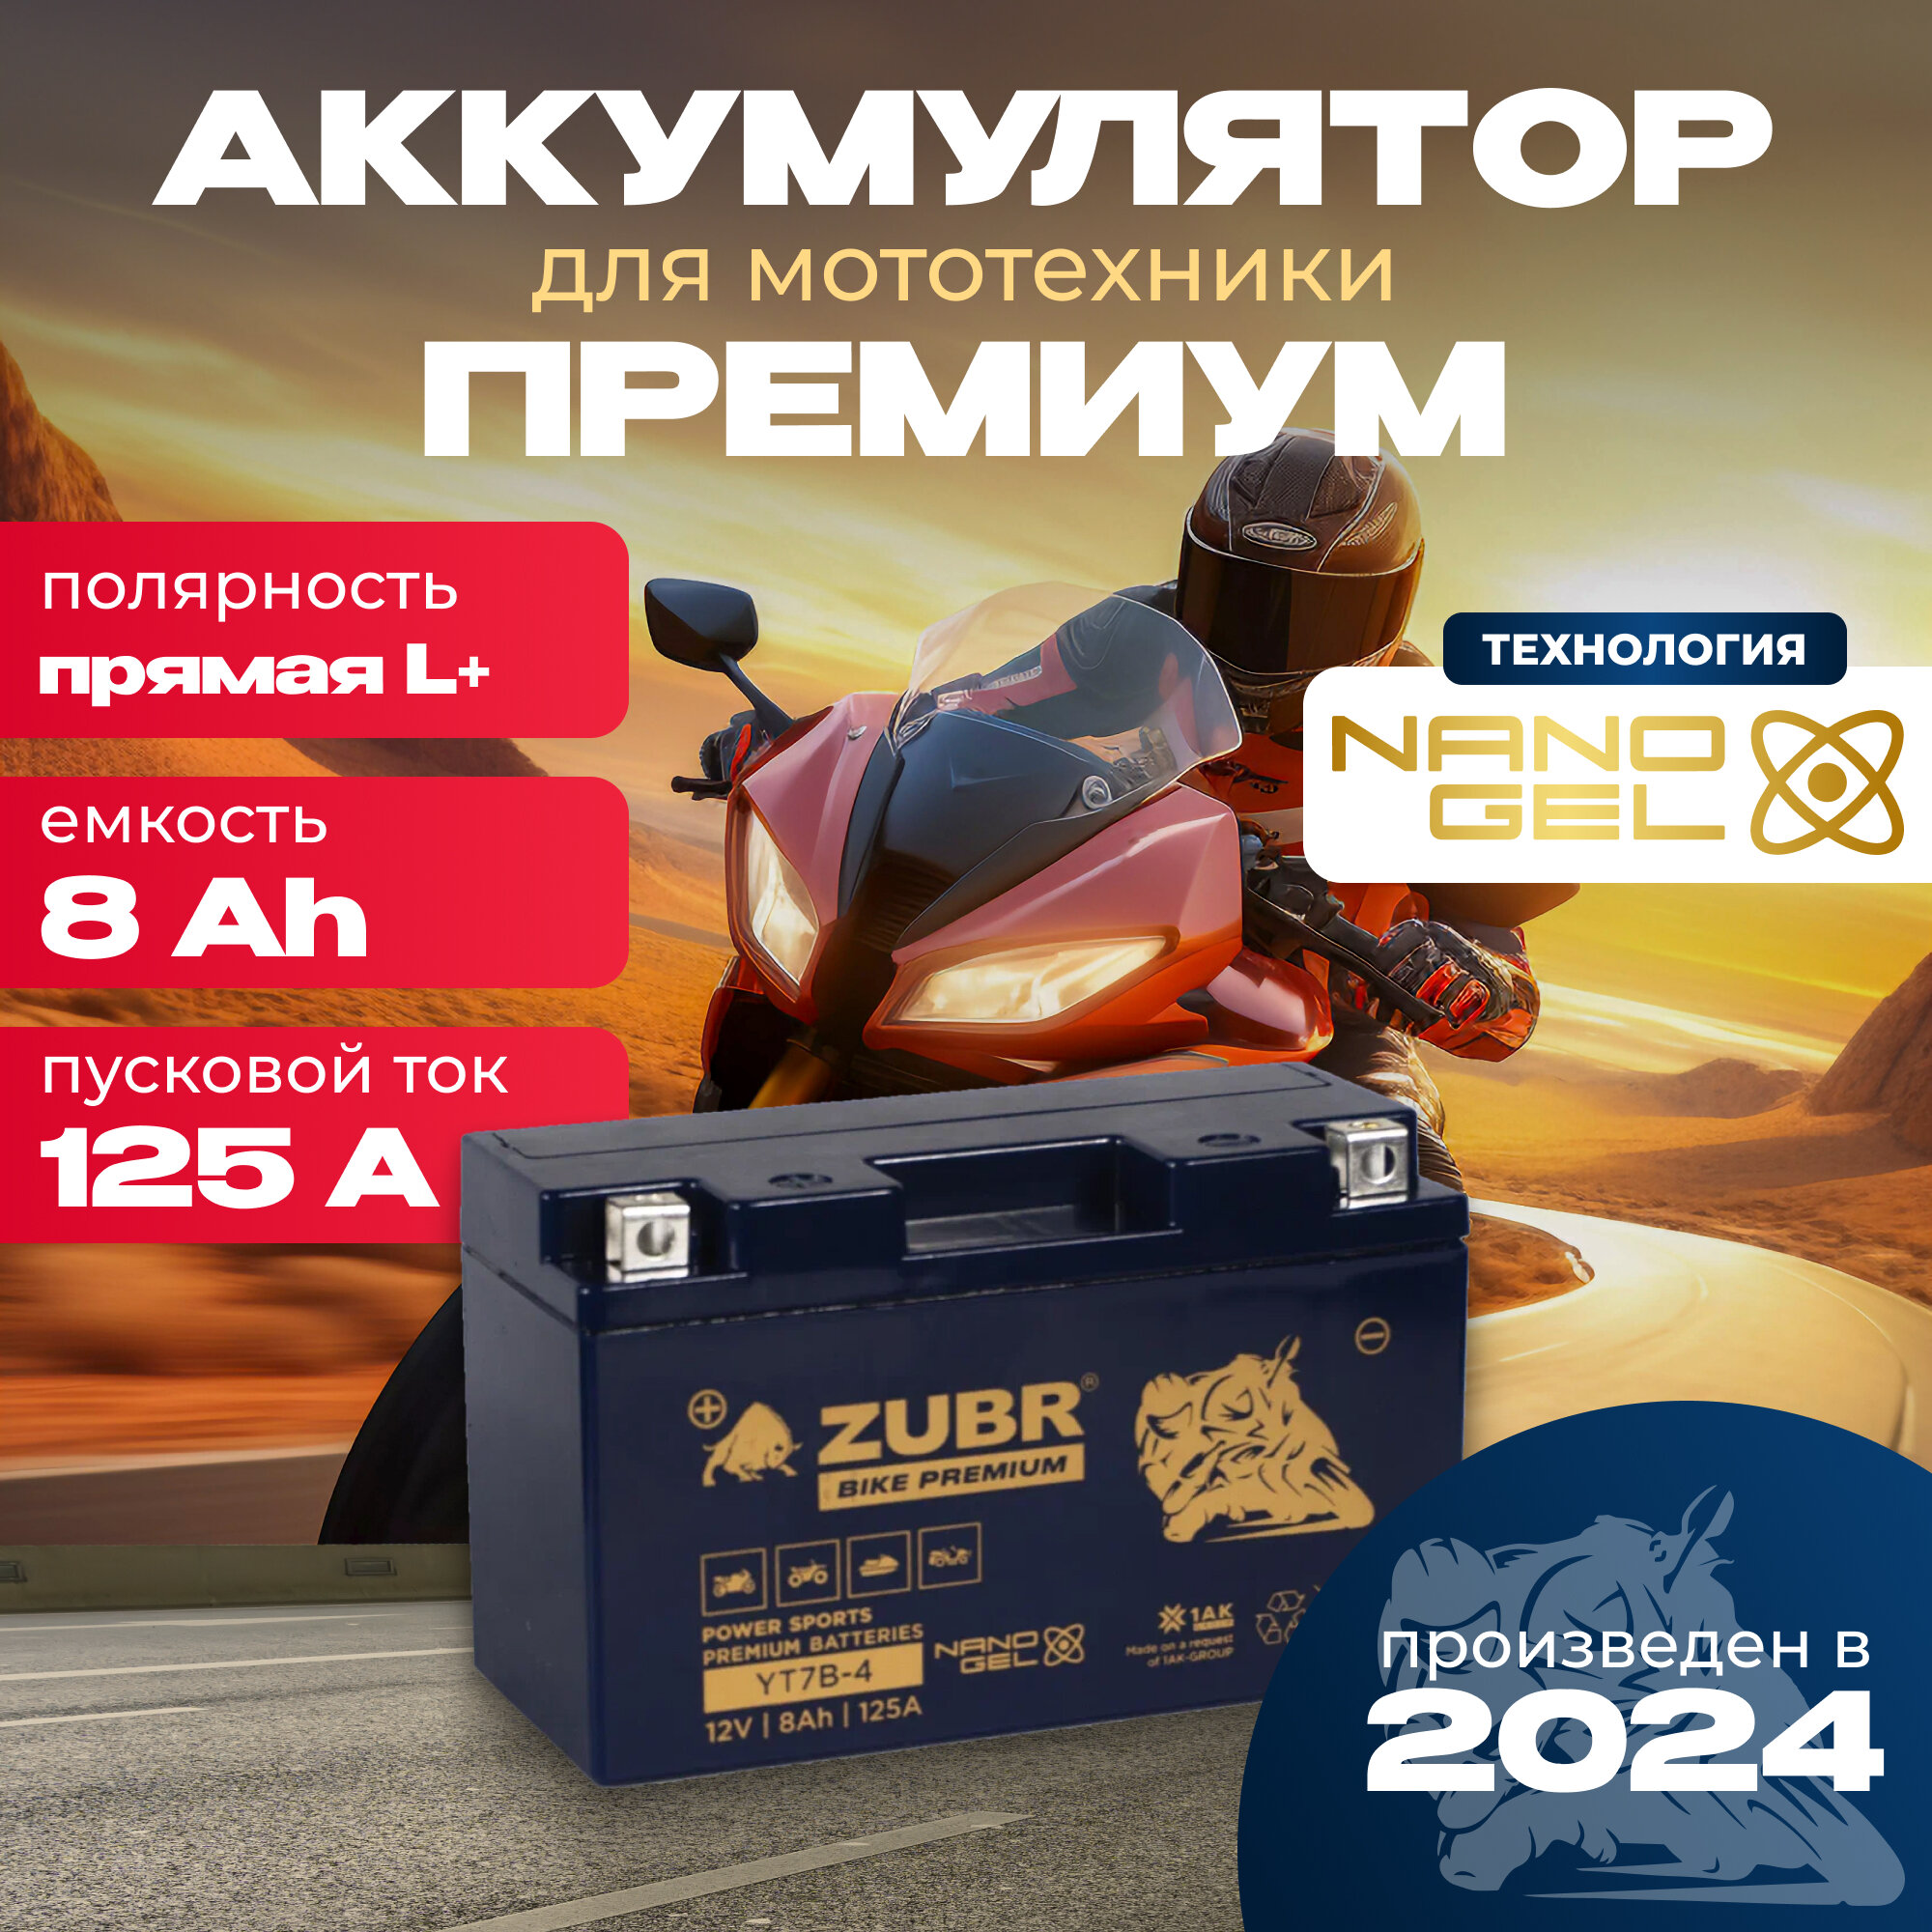 Аккумулятор для мотоцикла 12v ZUBR BIKE PREMIUM YT7B-4 (NANO-GEL) прямая полярность 8 Ah 125 A гелевый, акб на скутер, мопед, квадроцикл 150x65x92 мм